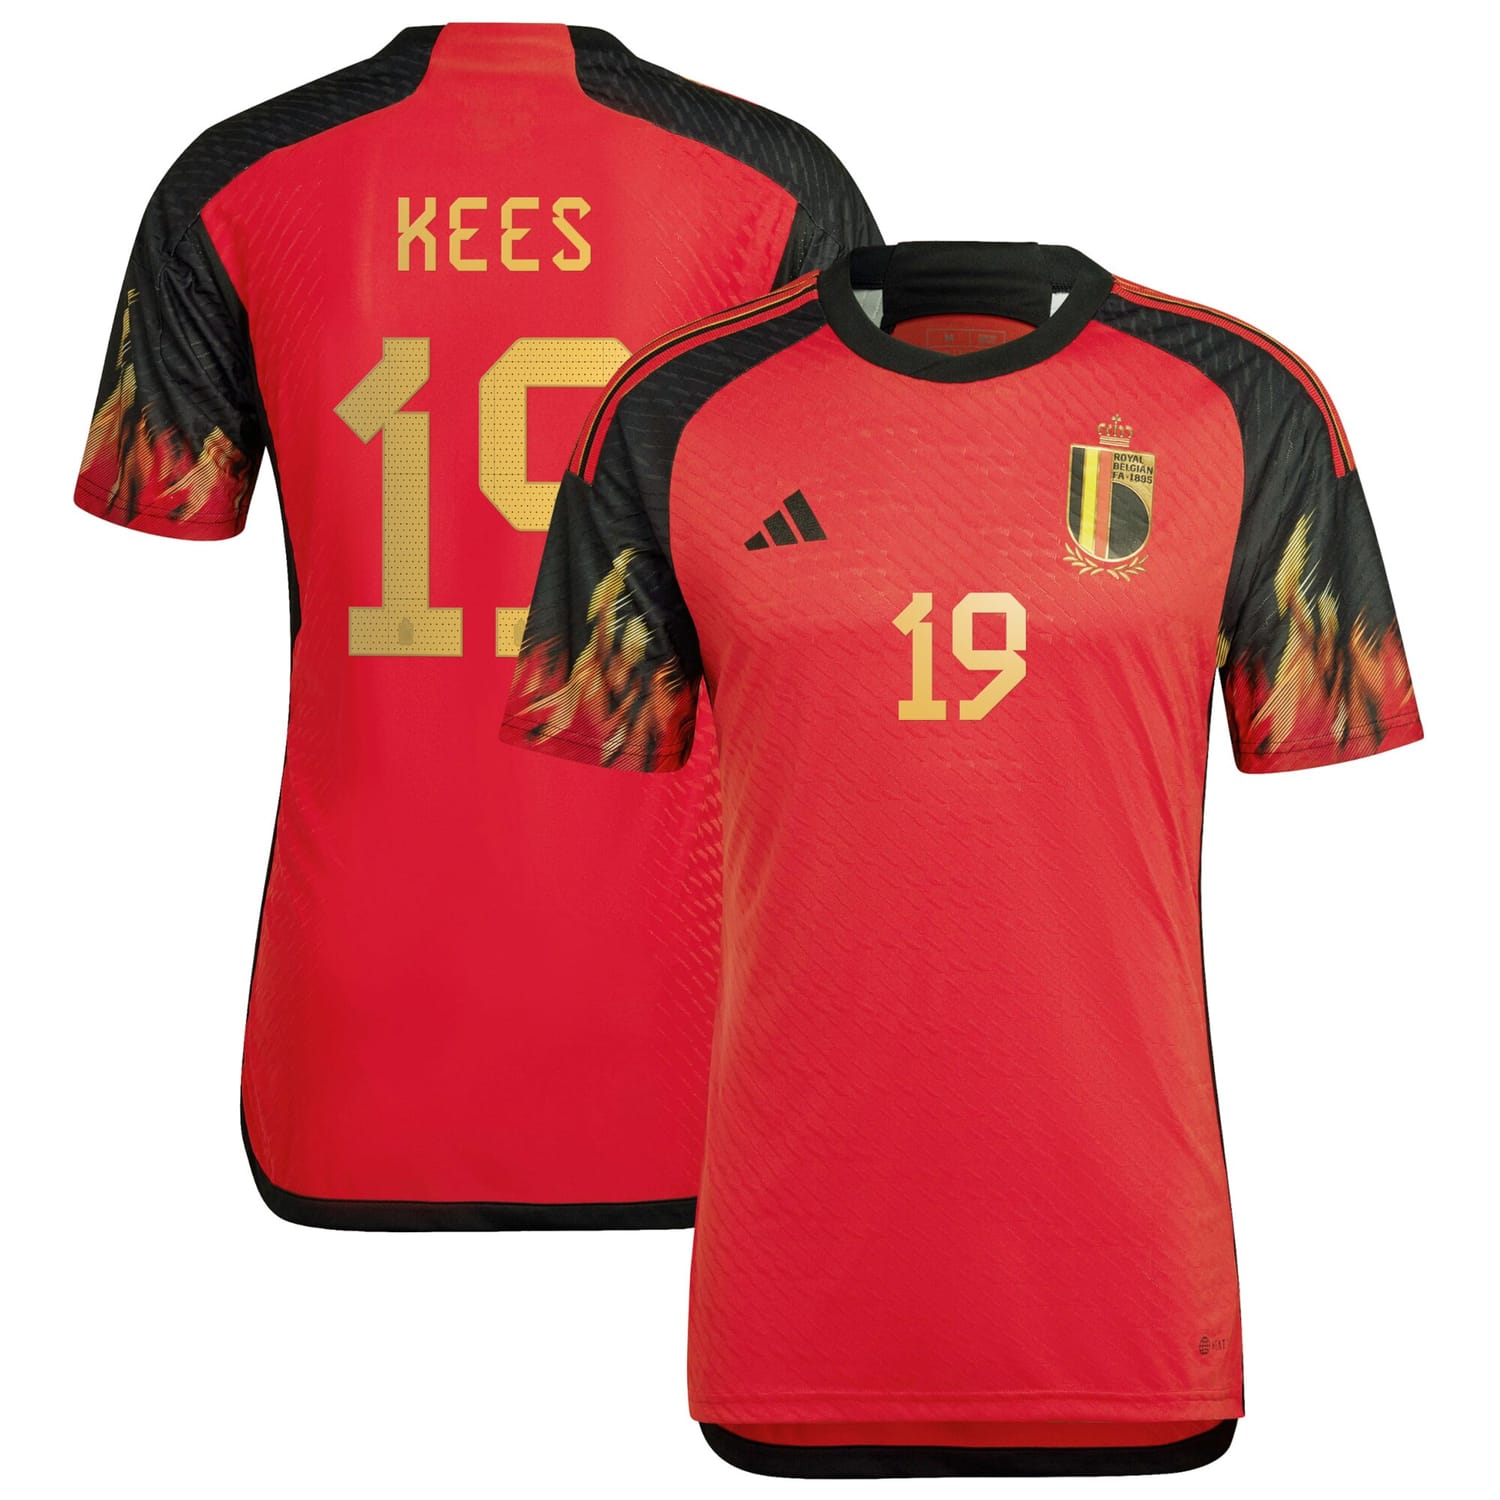 Belgium National Team Home Authentic Jersey Shirt 2022 player Sari Kees 19 printing for Men